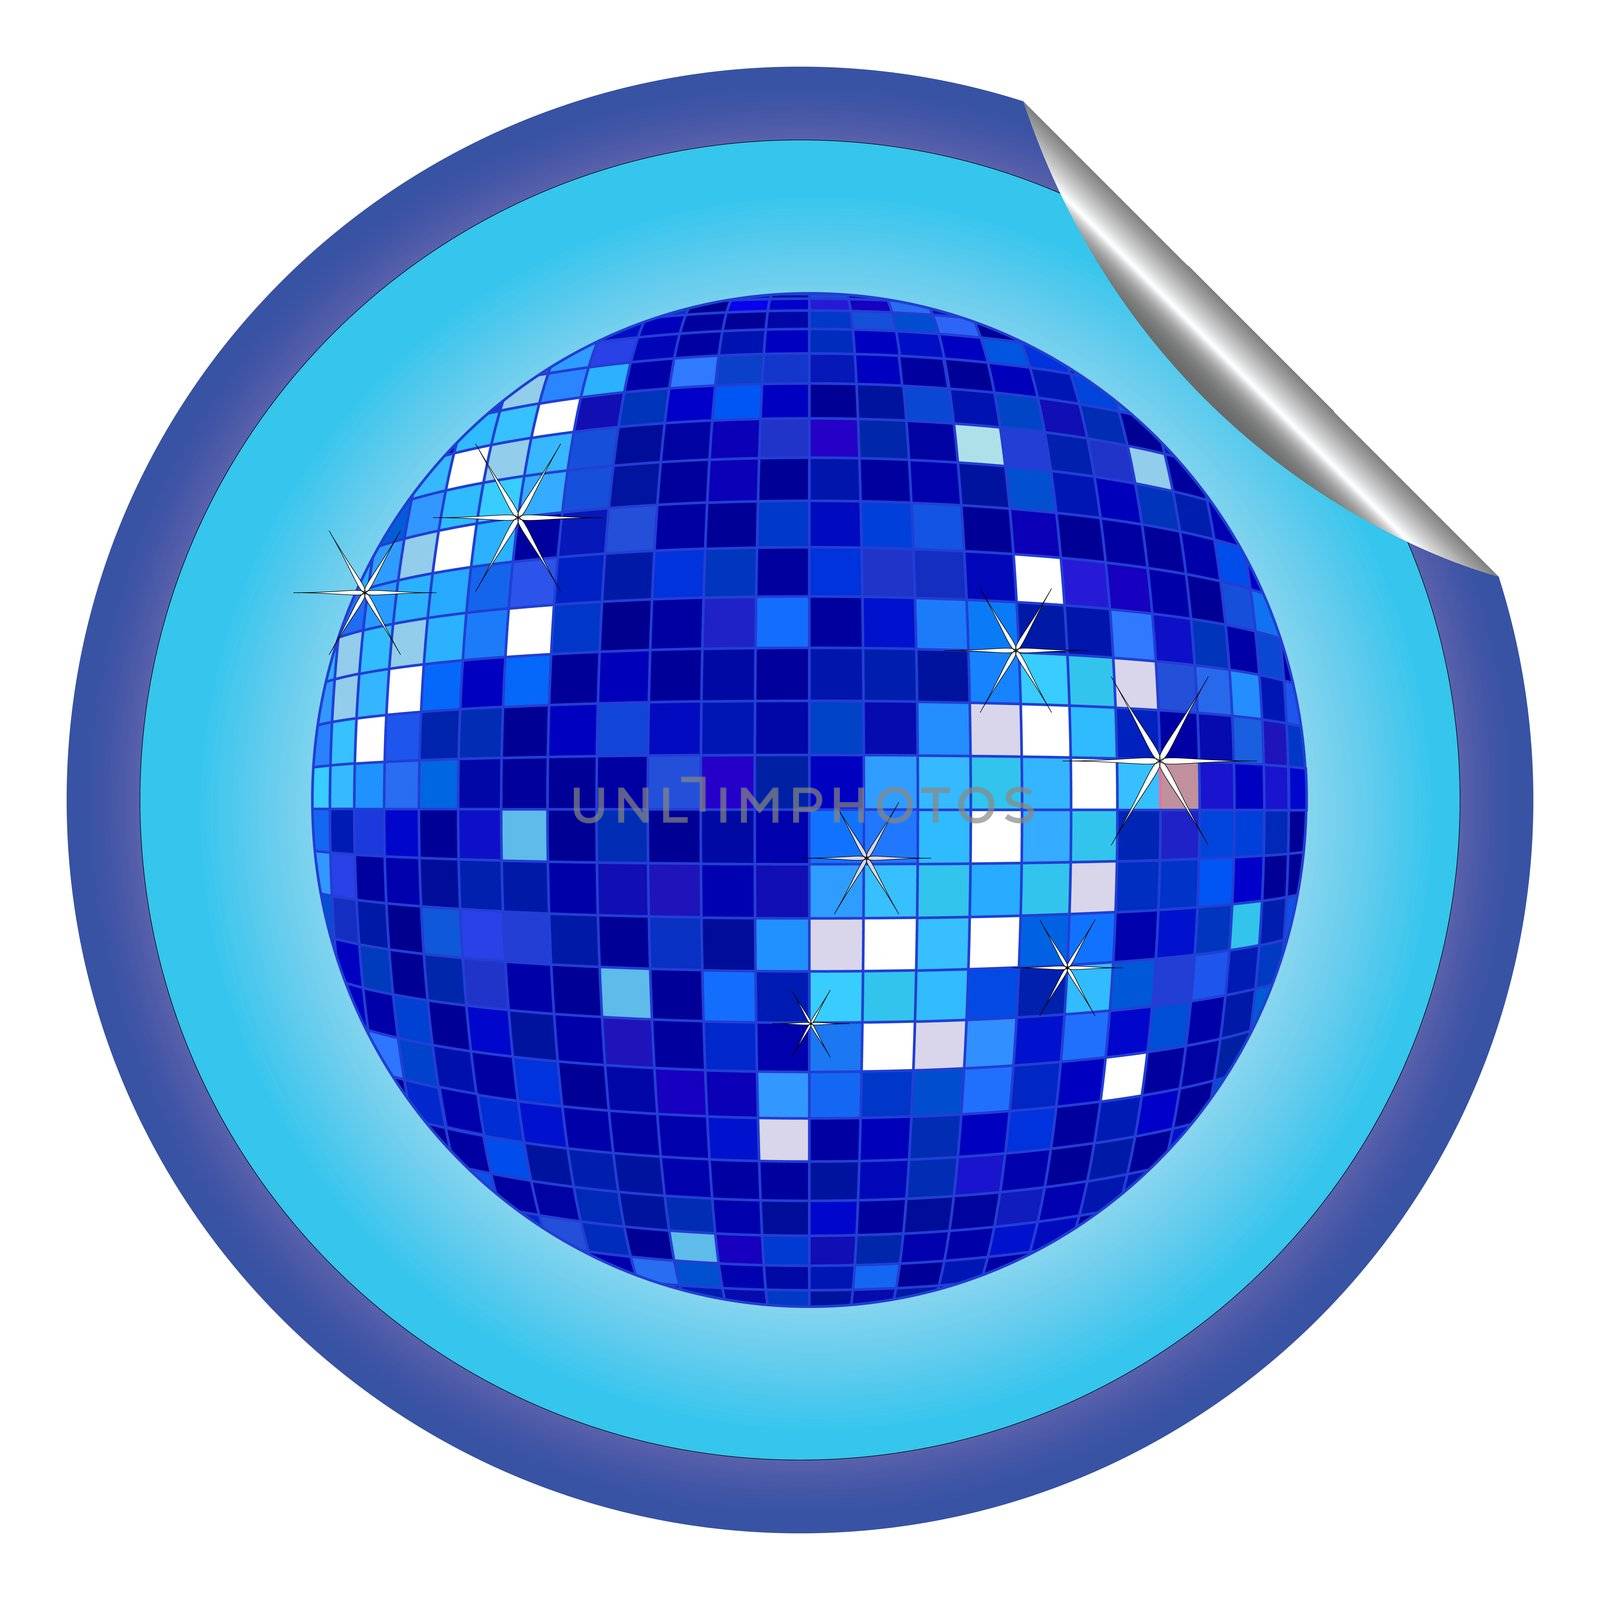 disco ball blue sticker, vector art illustration